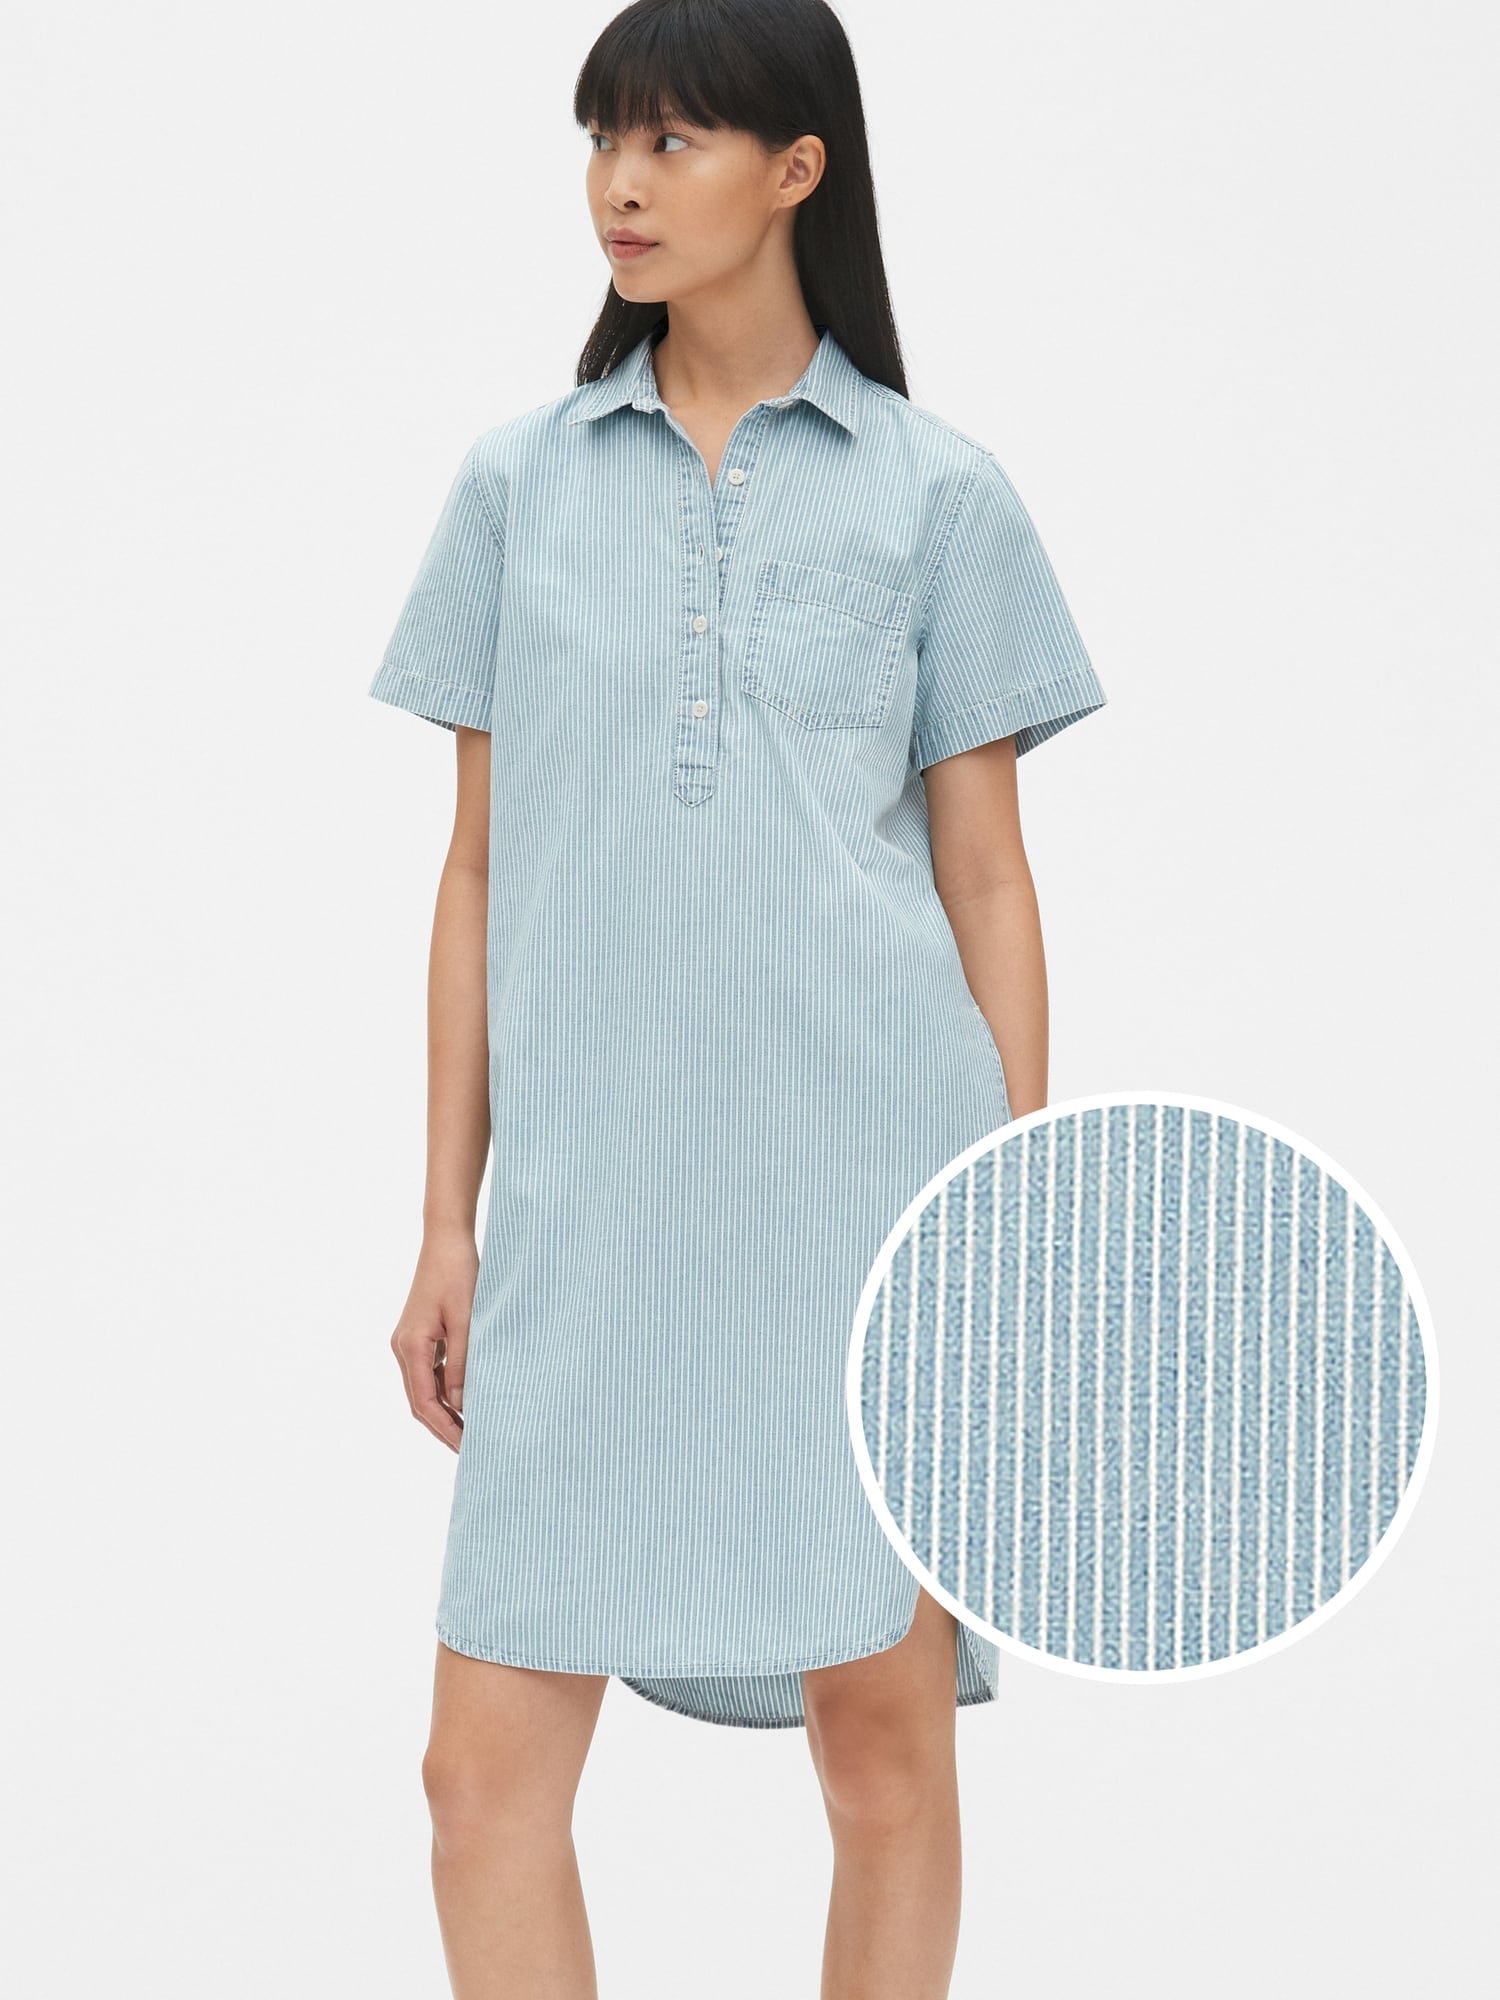 Perfect Şeritli Denim Gömlek Elbise product image